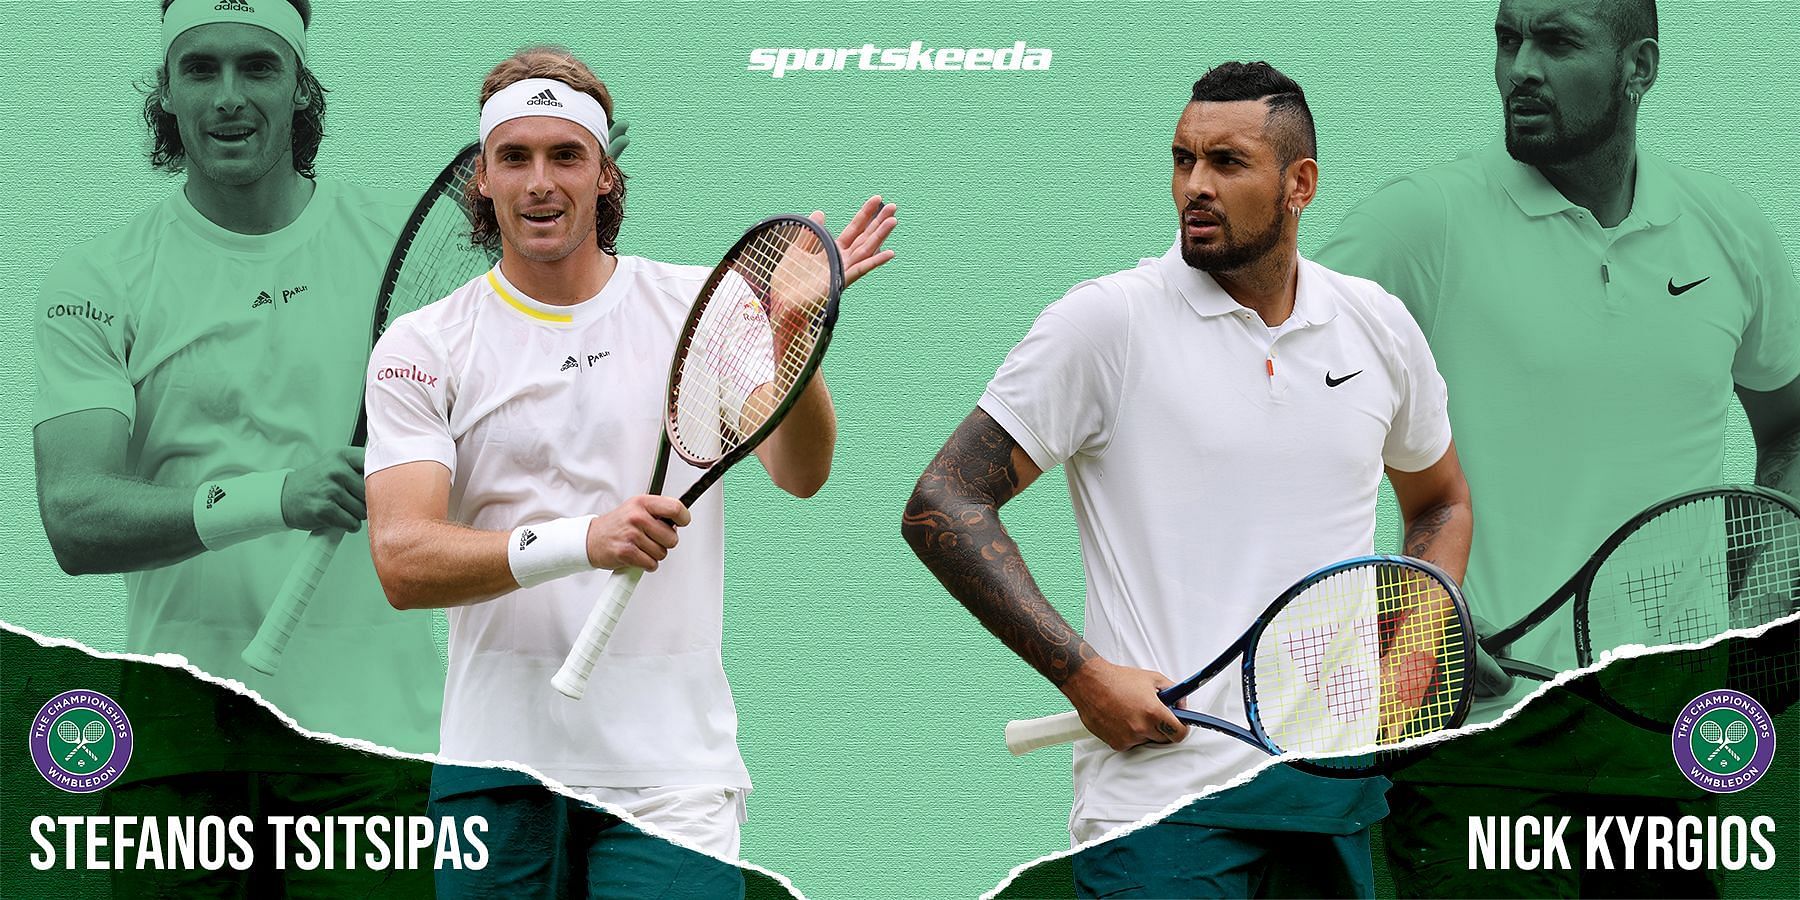 Wimbledon 2022 Stefanos Tsitsipas vs Nick Kyrgios preview, head-to-head, prediction, odds and pick